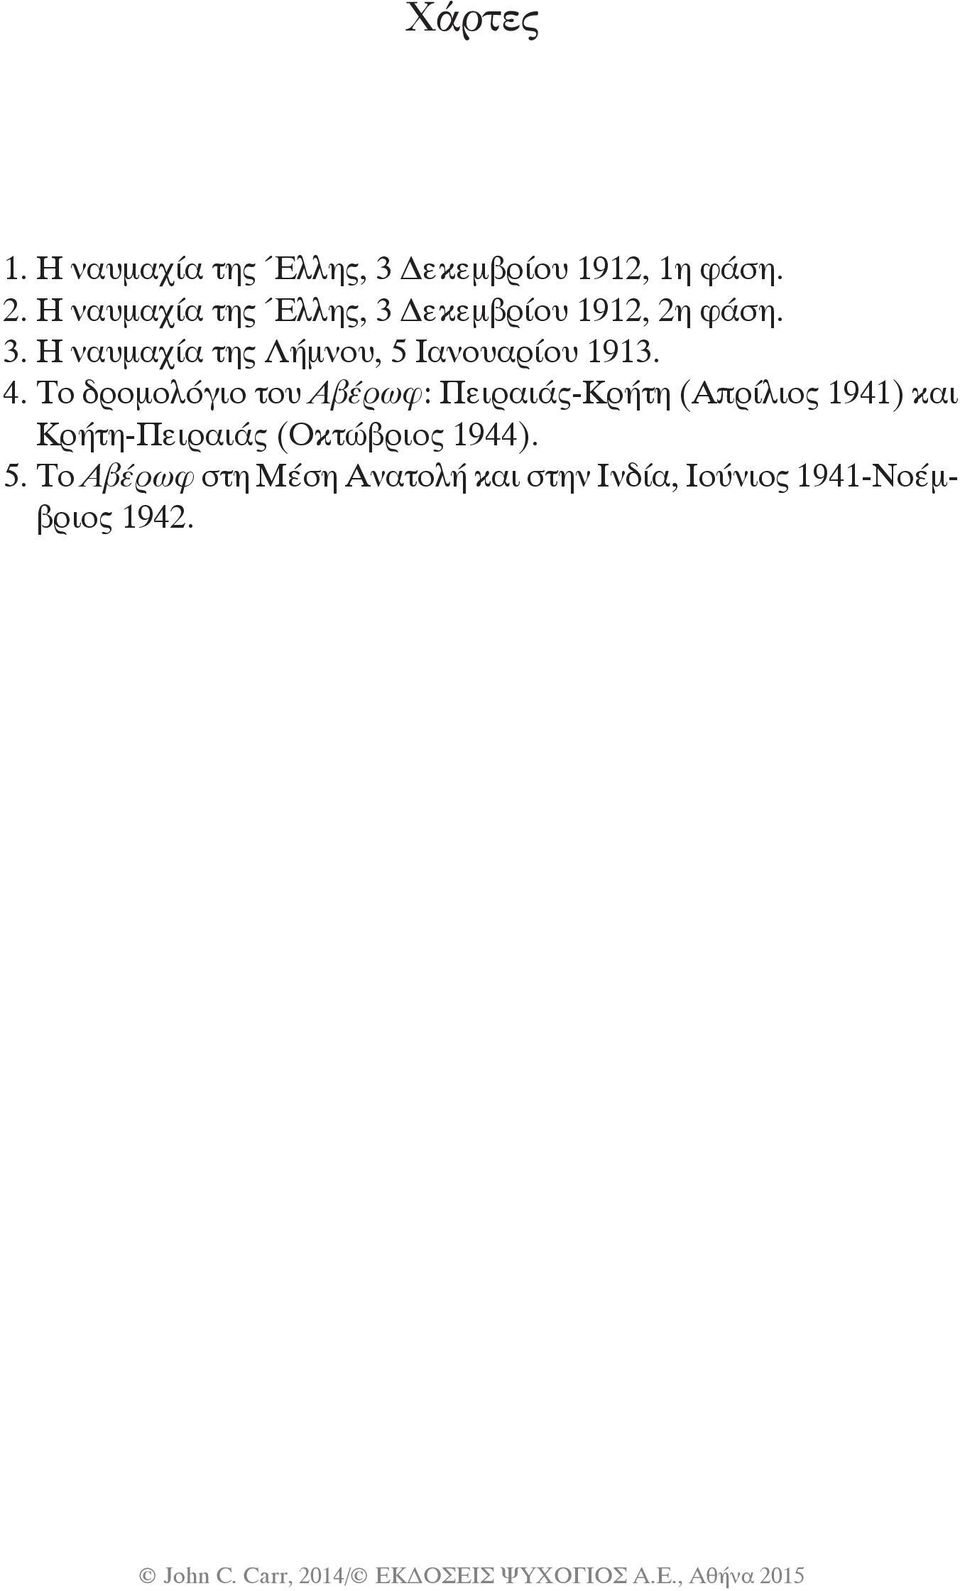 4. To δρομολόγιο του Αβέρωφ: Πειραιάς-Κρήτη (Απρίλιος 1941) και Κρήτη-Πειραιάς